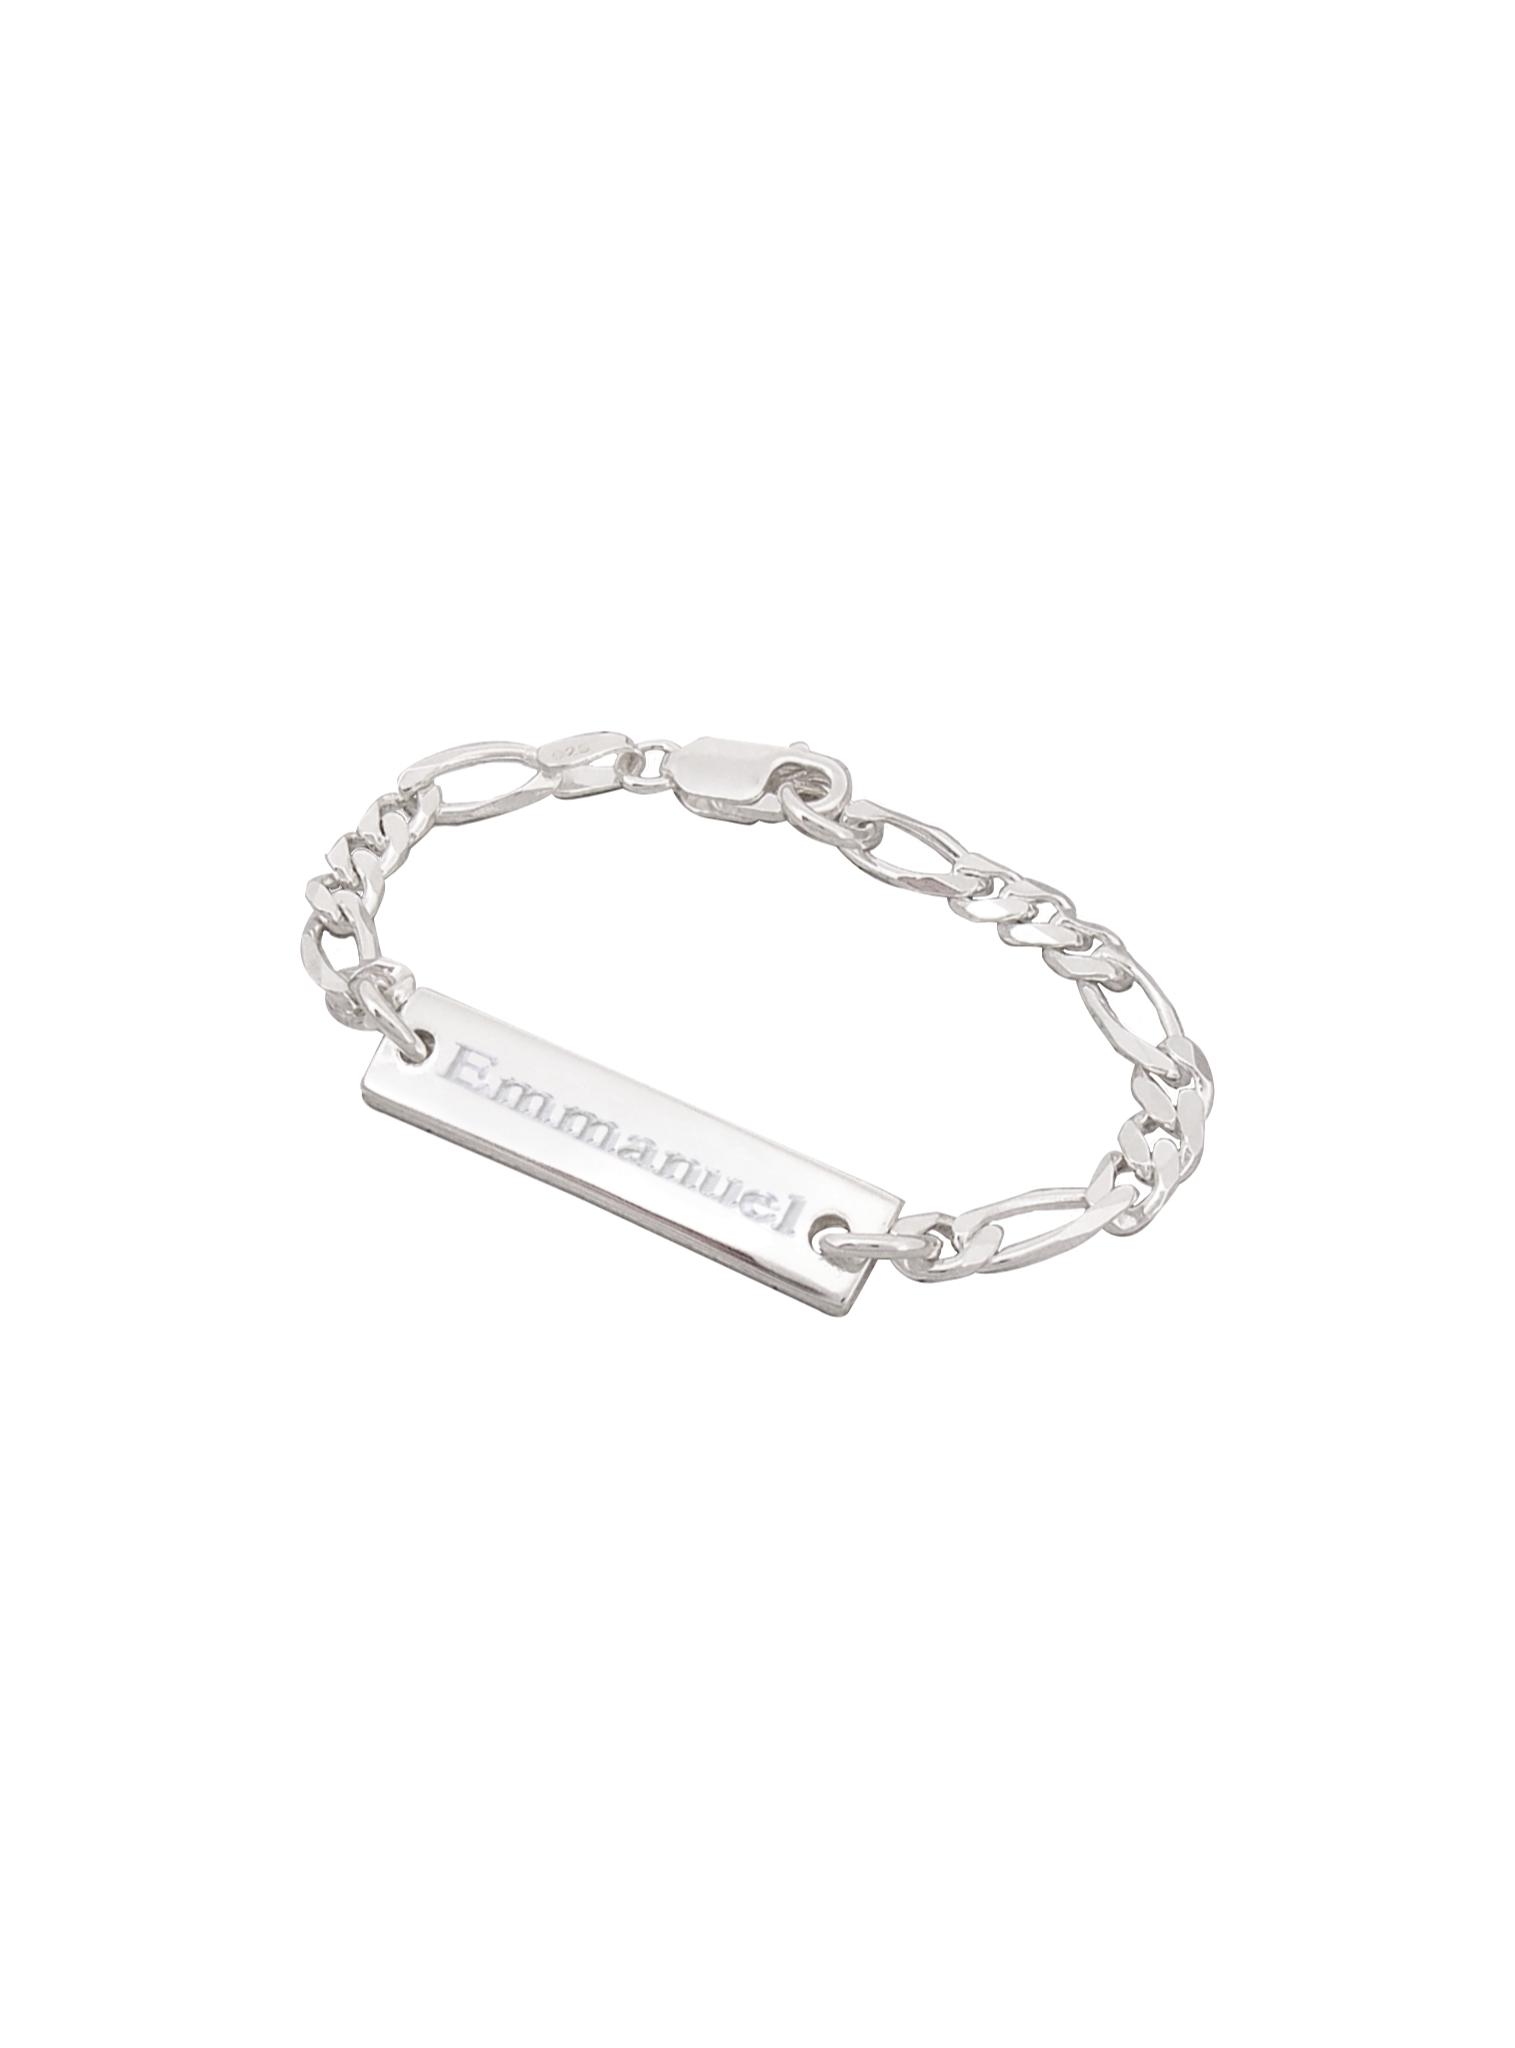 Custom Baby Bracelet Name | Personalised Baby Boy Bracelet | Baby Boy  Bracelet Name - Customized Bracelets - Aliexpress